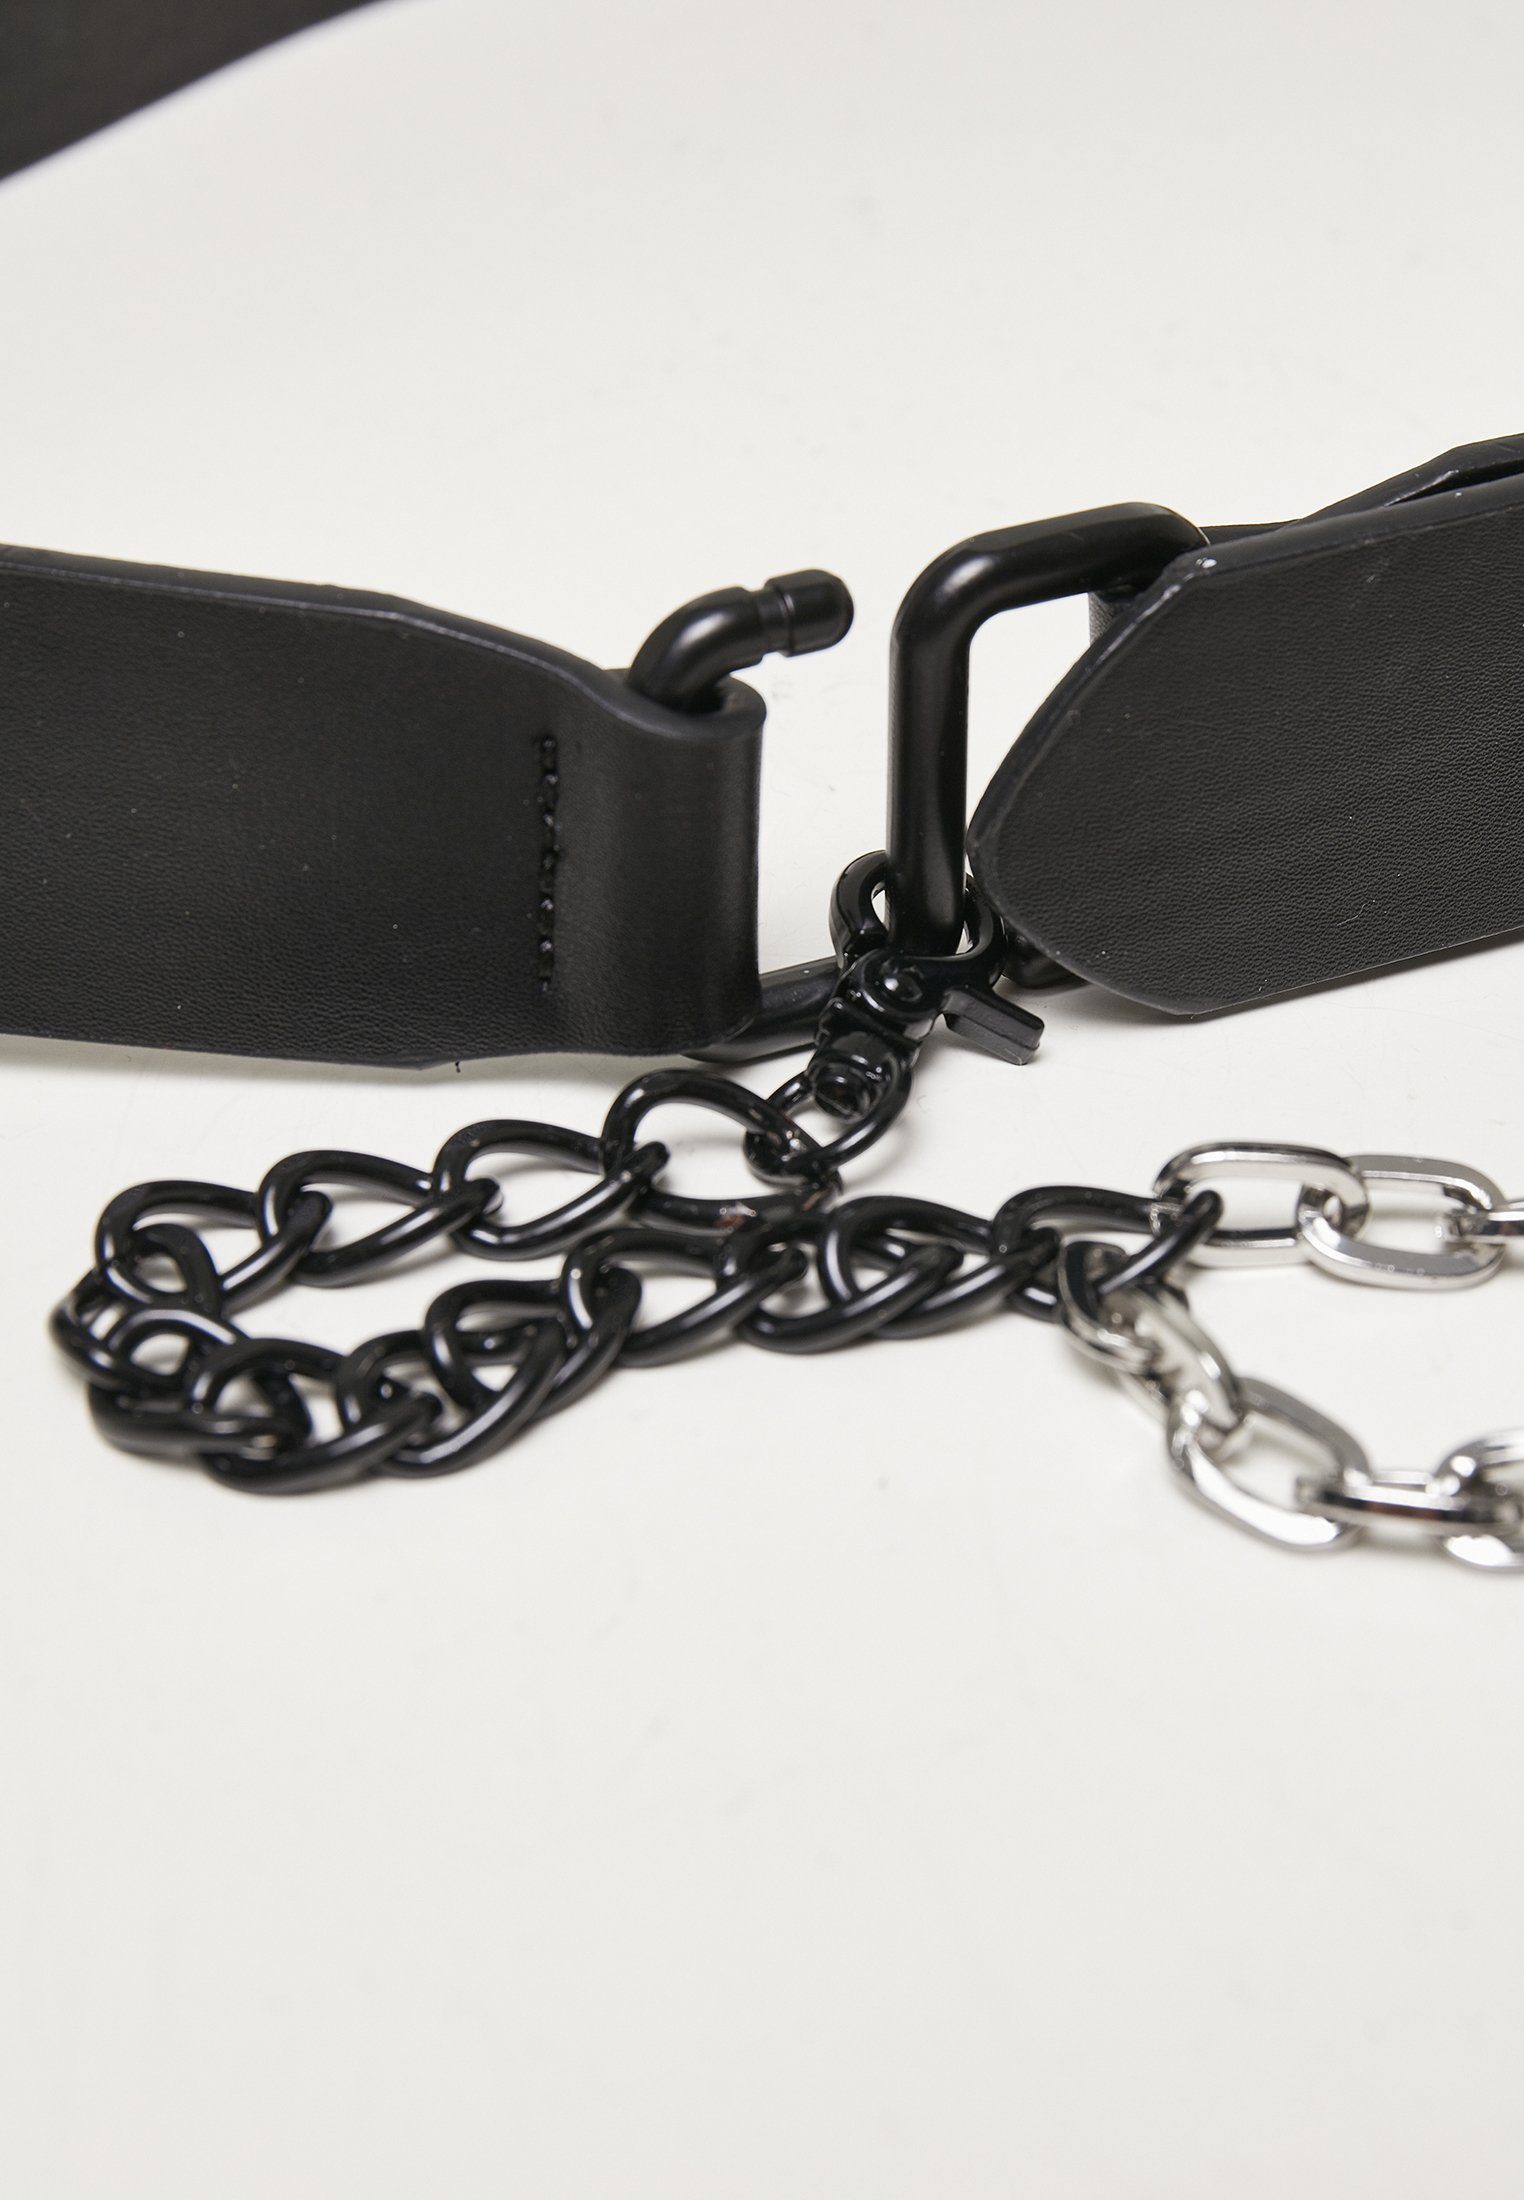 Imitation With Hüftgürtel Leather Metal URBAN Chain Accessories Belt CLASSICS